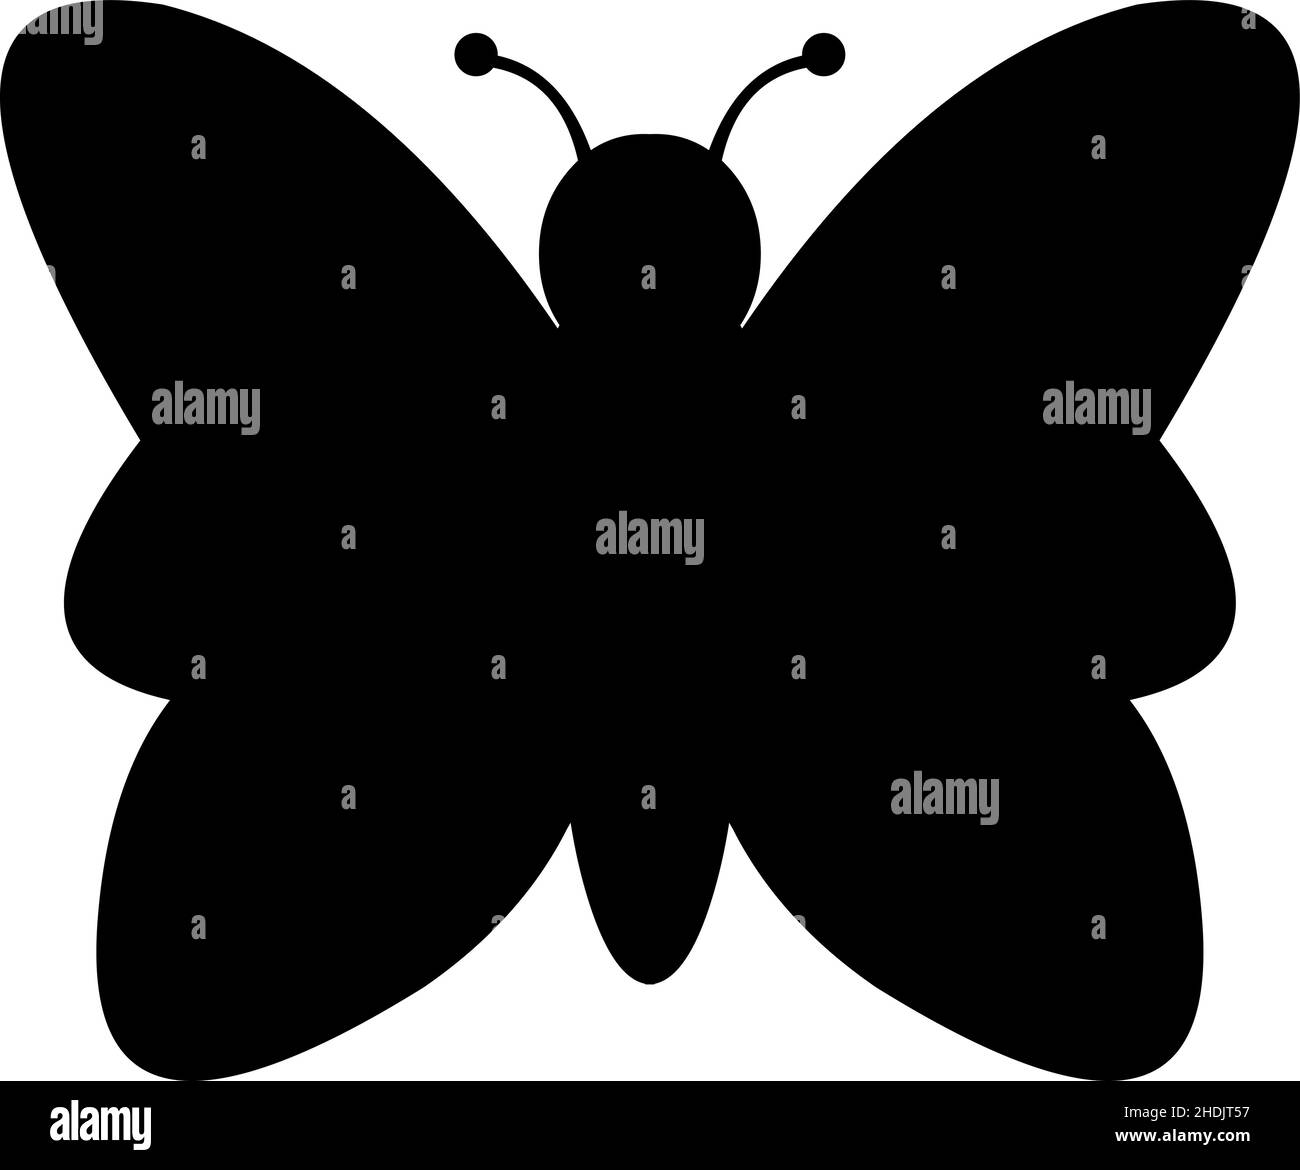 Vektor-Illustration der schwarzen Silhouette eines Schmetterlings Stock Vektor